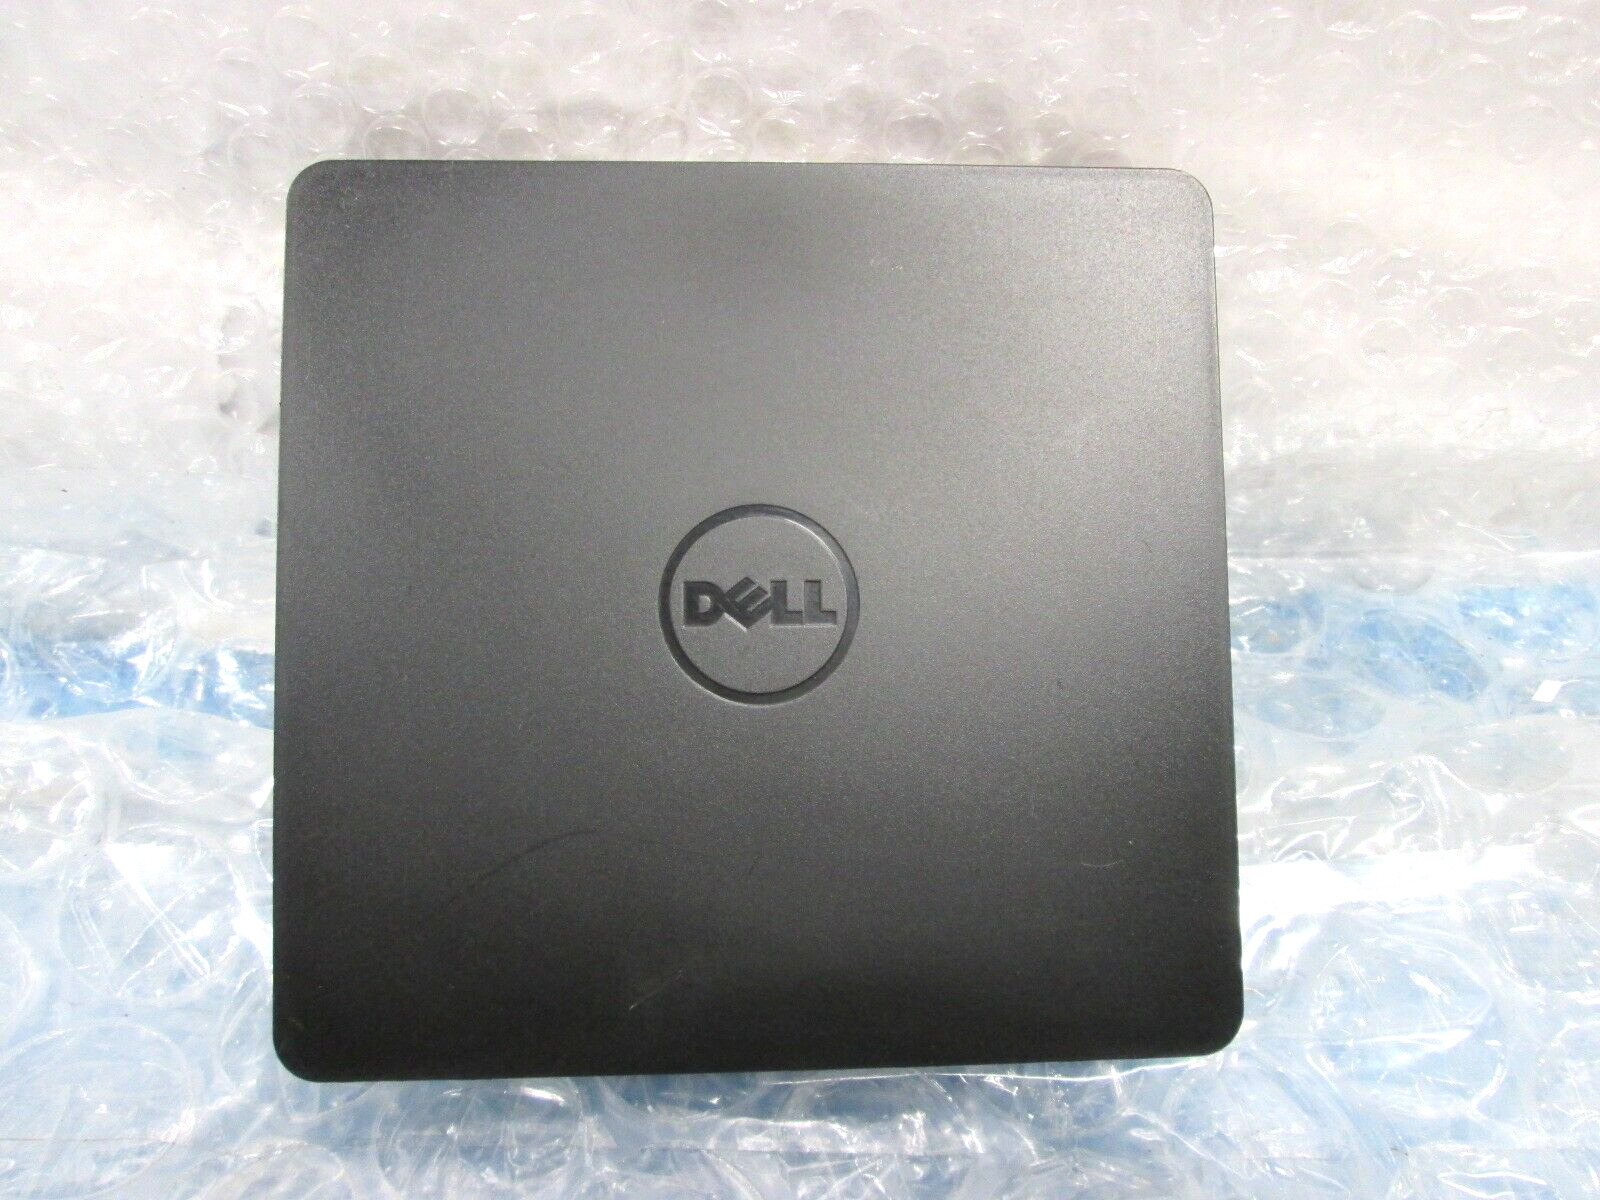 Dell DW316 External USB 2.0 Plug and Play Slim DVD R/W Optical Drive GP61NB60.